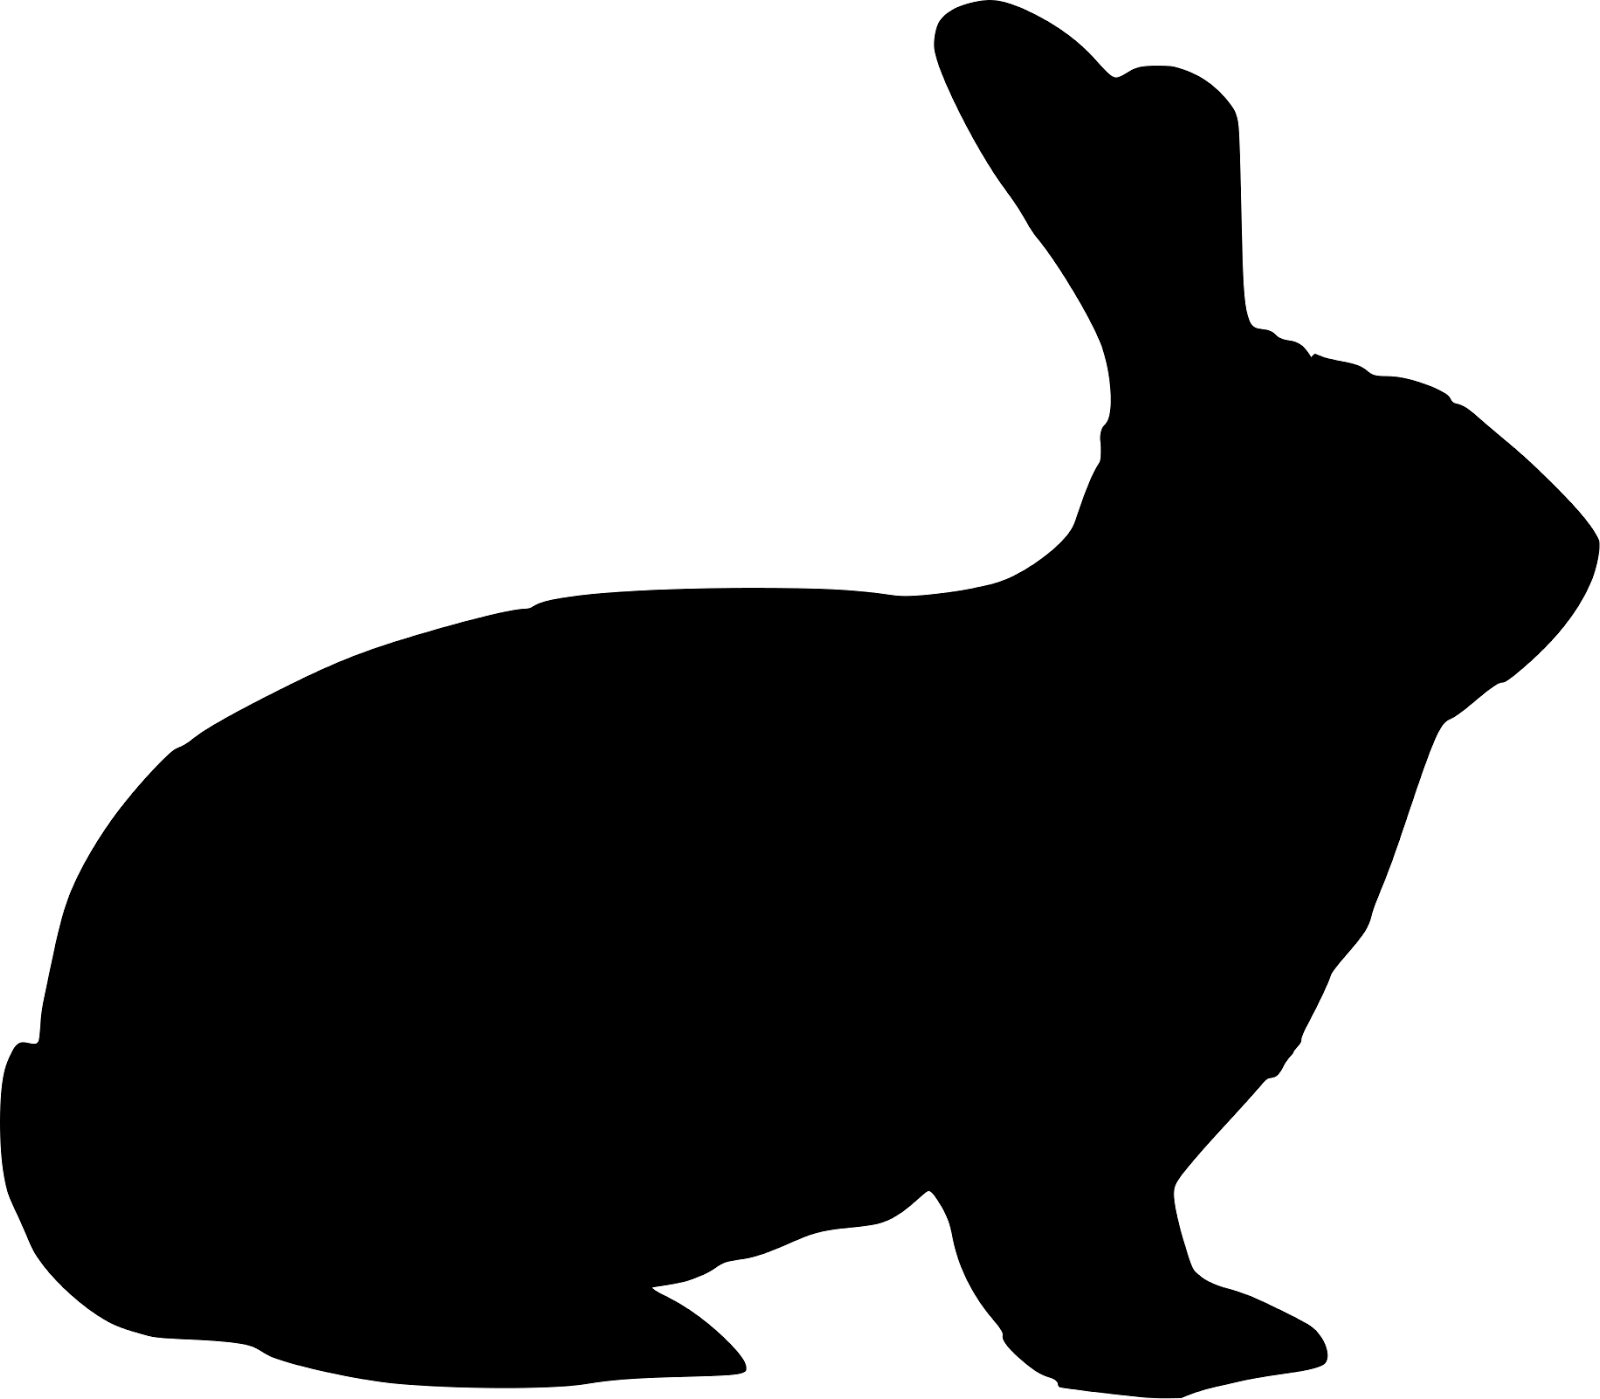 Animals For > Rabbit Silhouette Vector